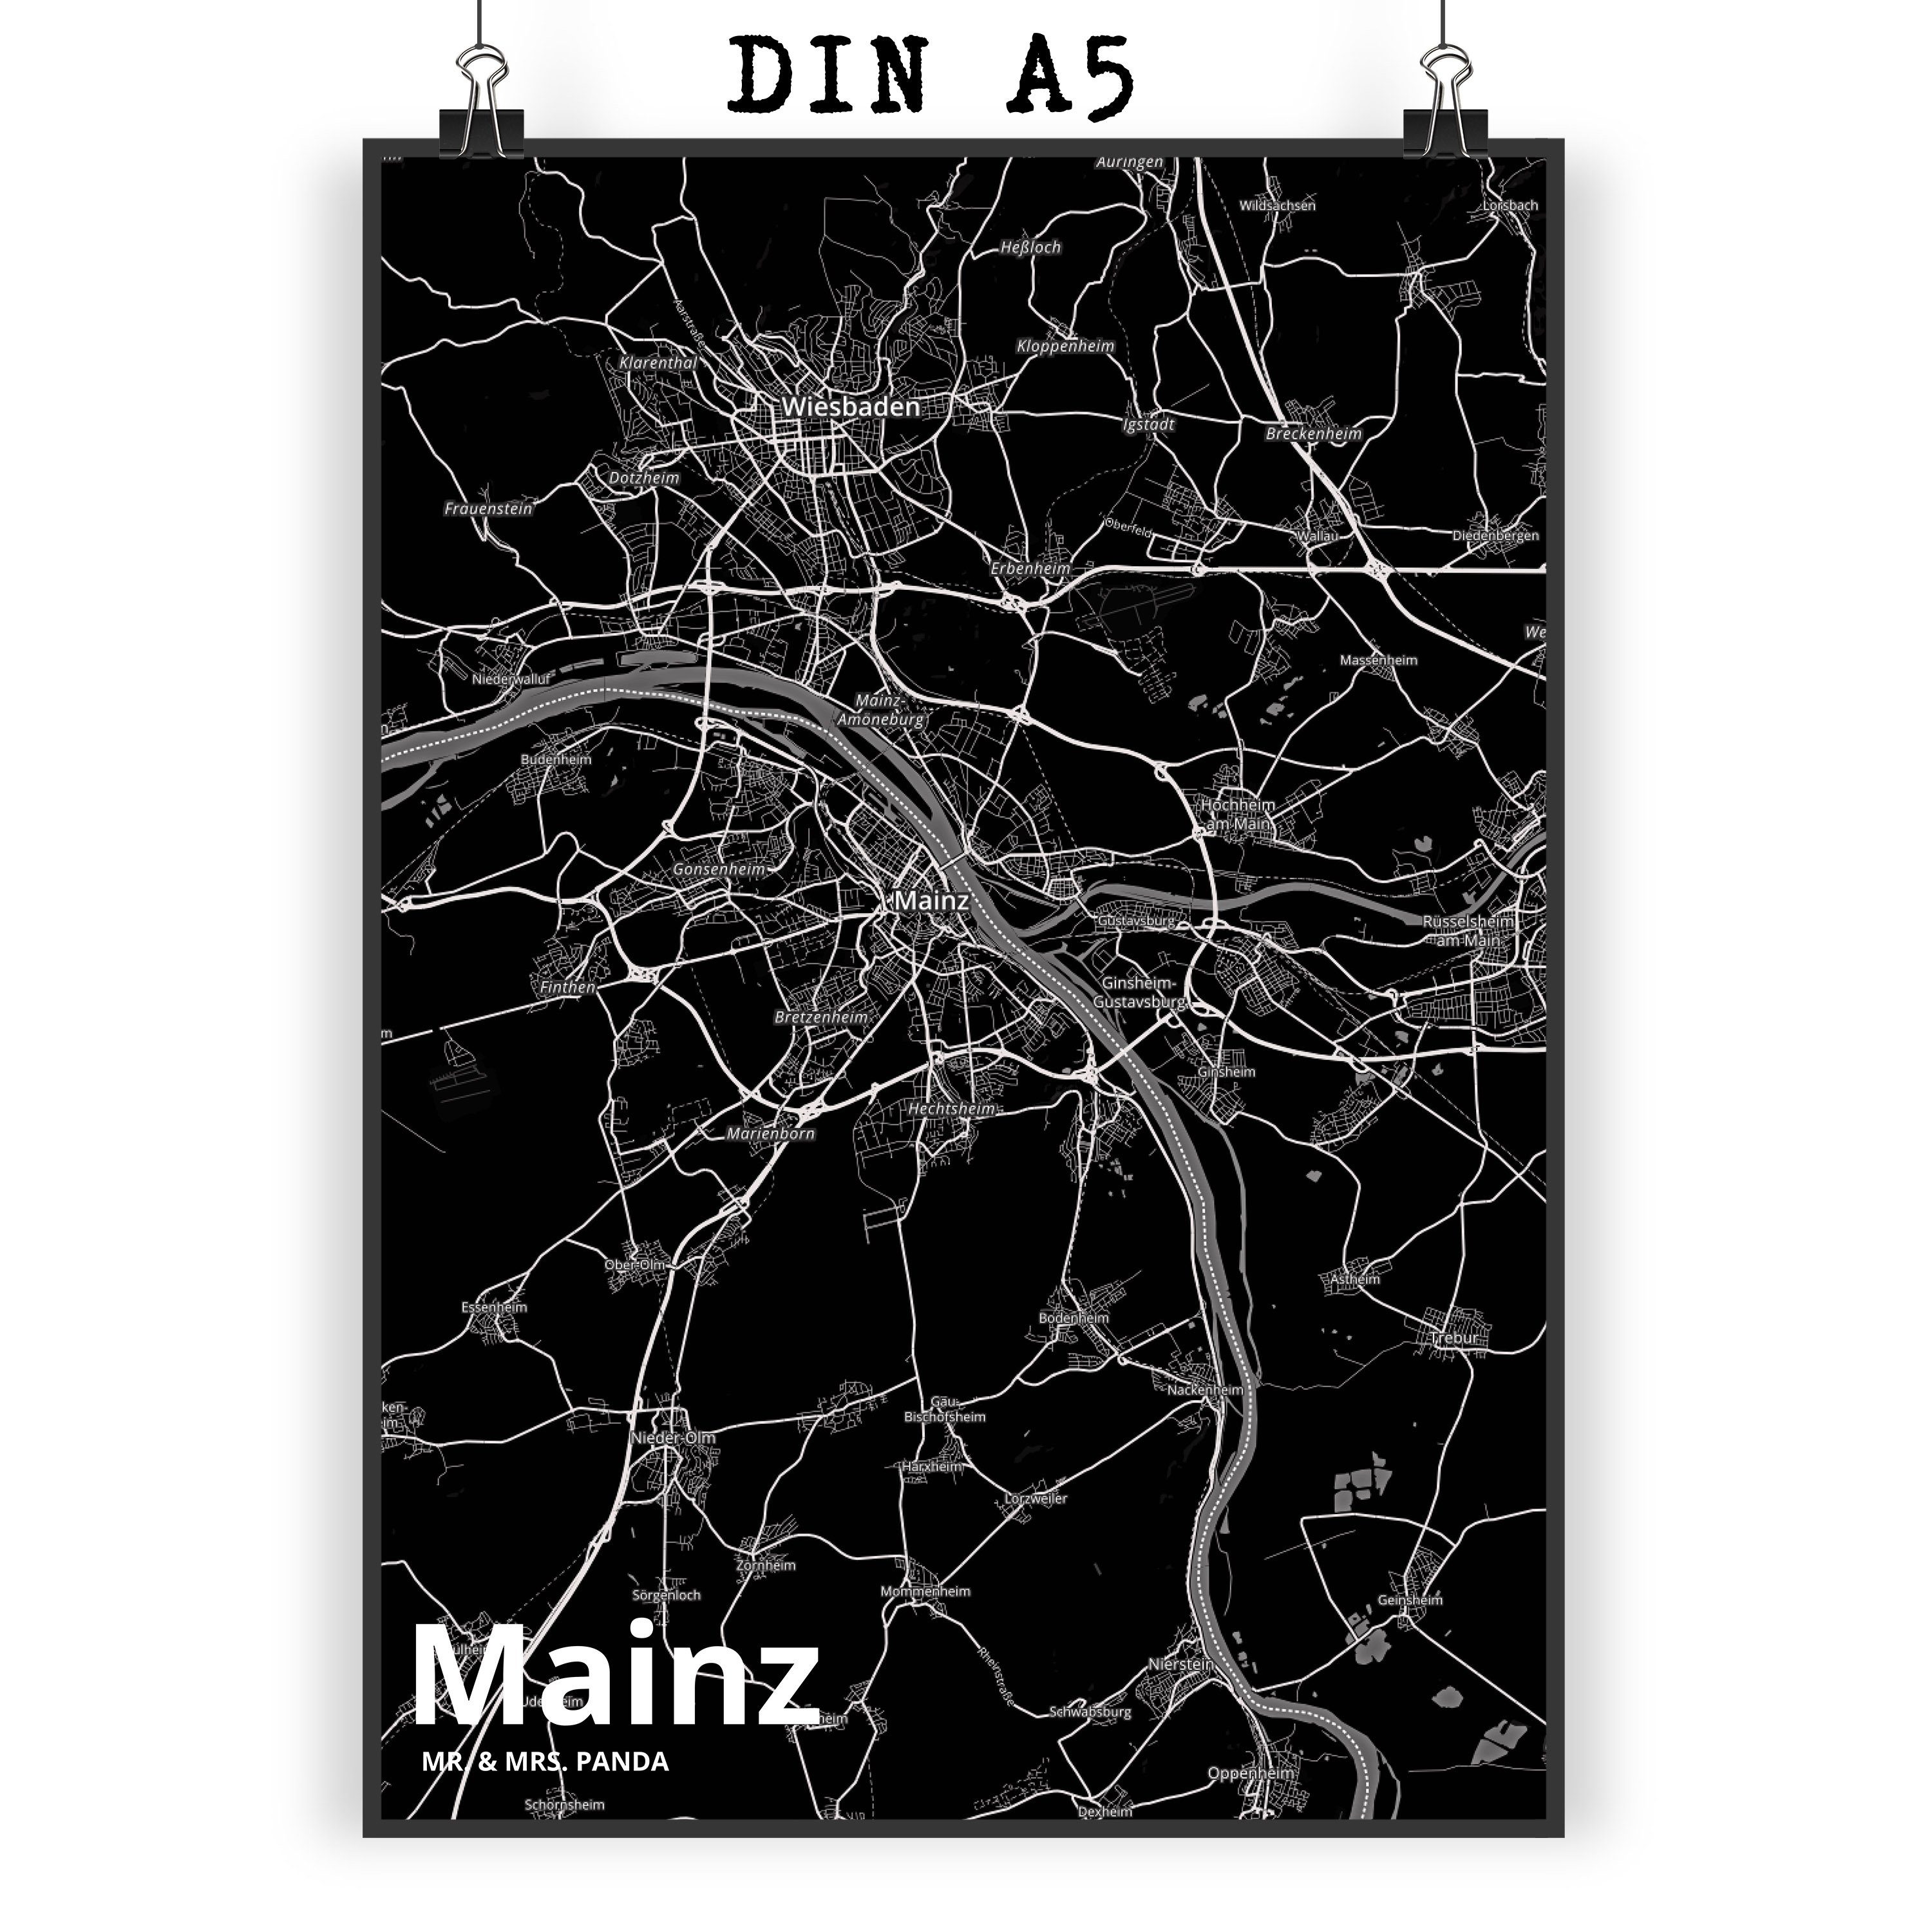 Mr. & Mrs. Panda Poster DIN A5 Mainz - Geschenk, Bild, Kinderposter, Dorf, Ort, Posterdruck, Stadt Black (1 St)